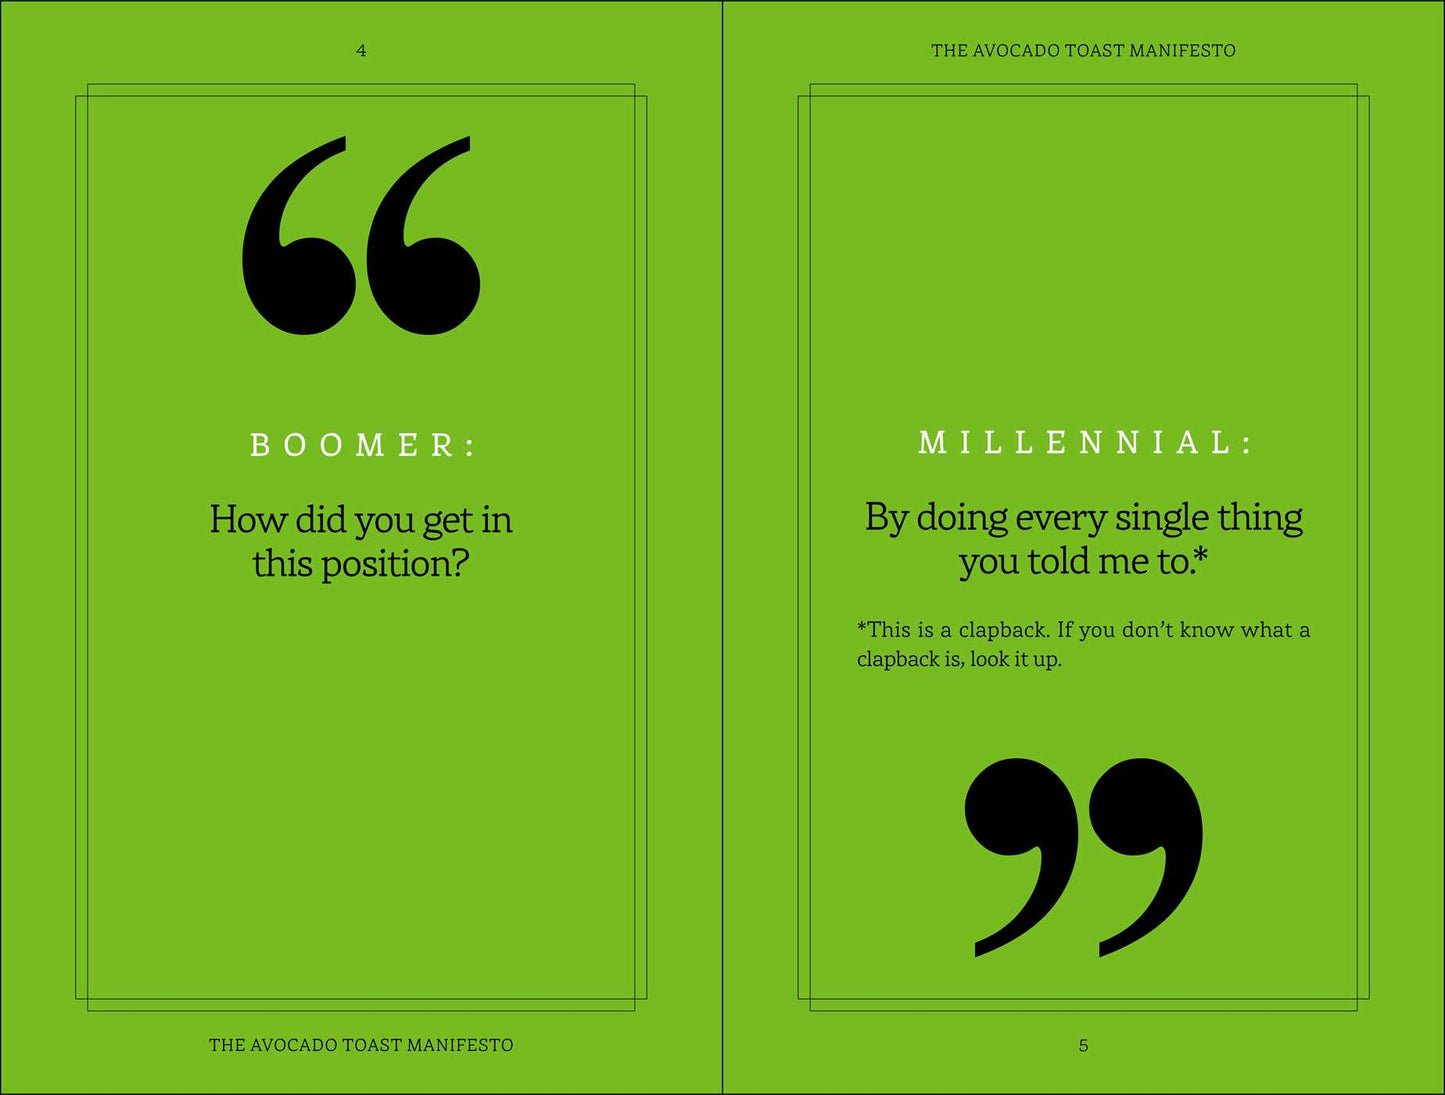 The Avocado Toast Manifesto: A Millennial Survival Guide